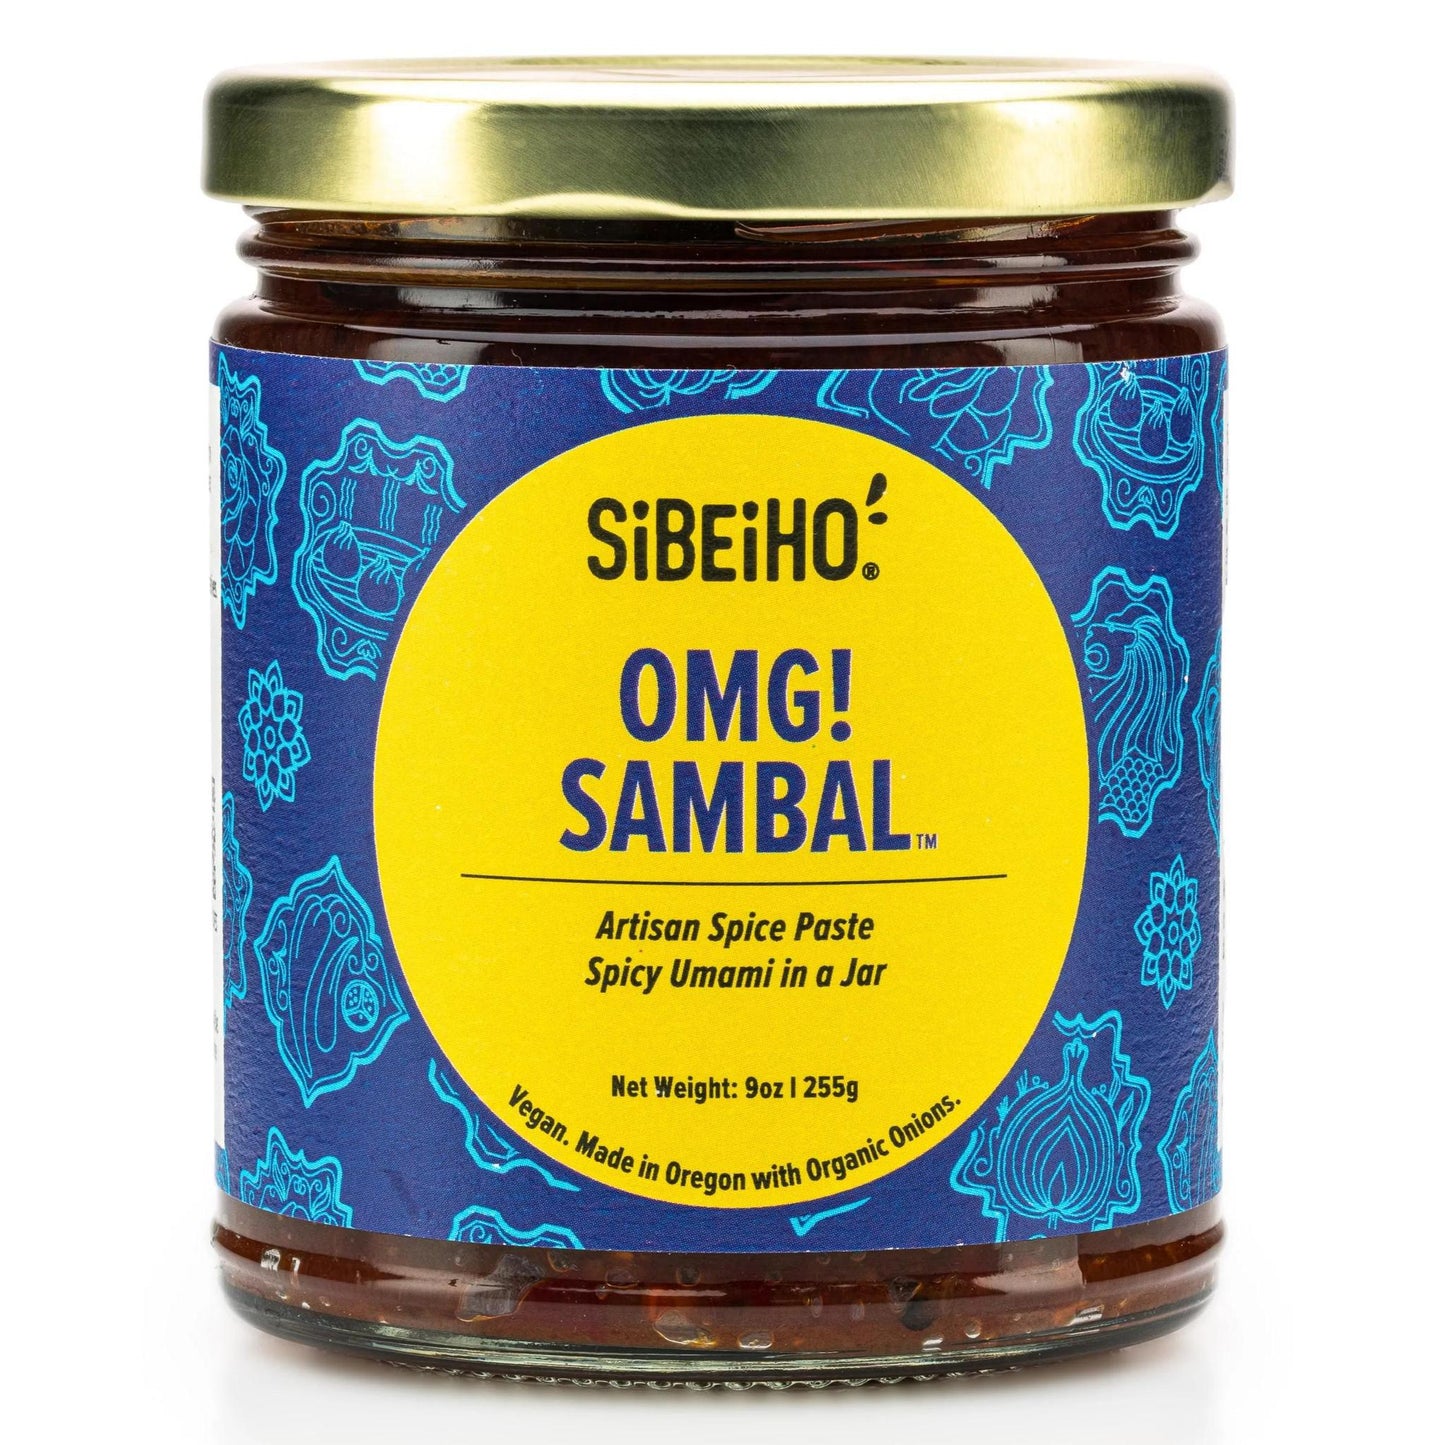 Sibeiho - 'OMG!' Sambal Kachang (7OZ) - The Epicurean Trader